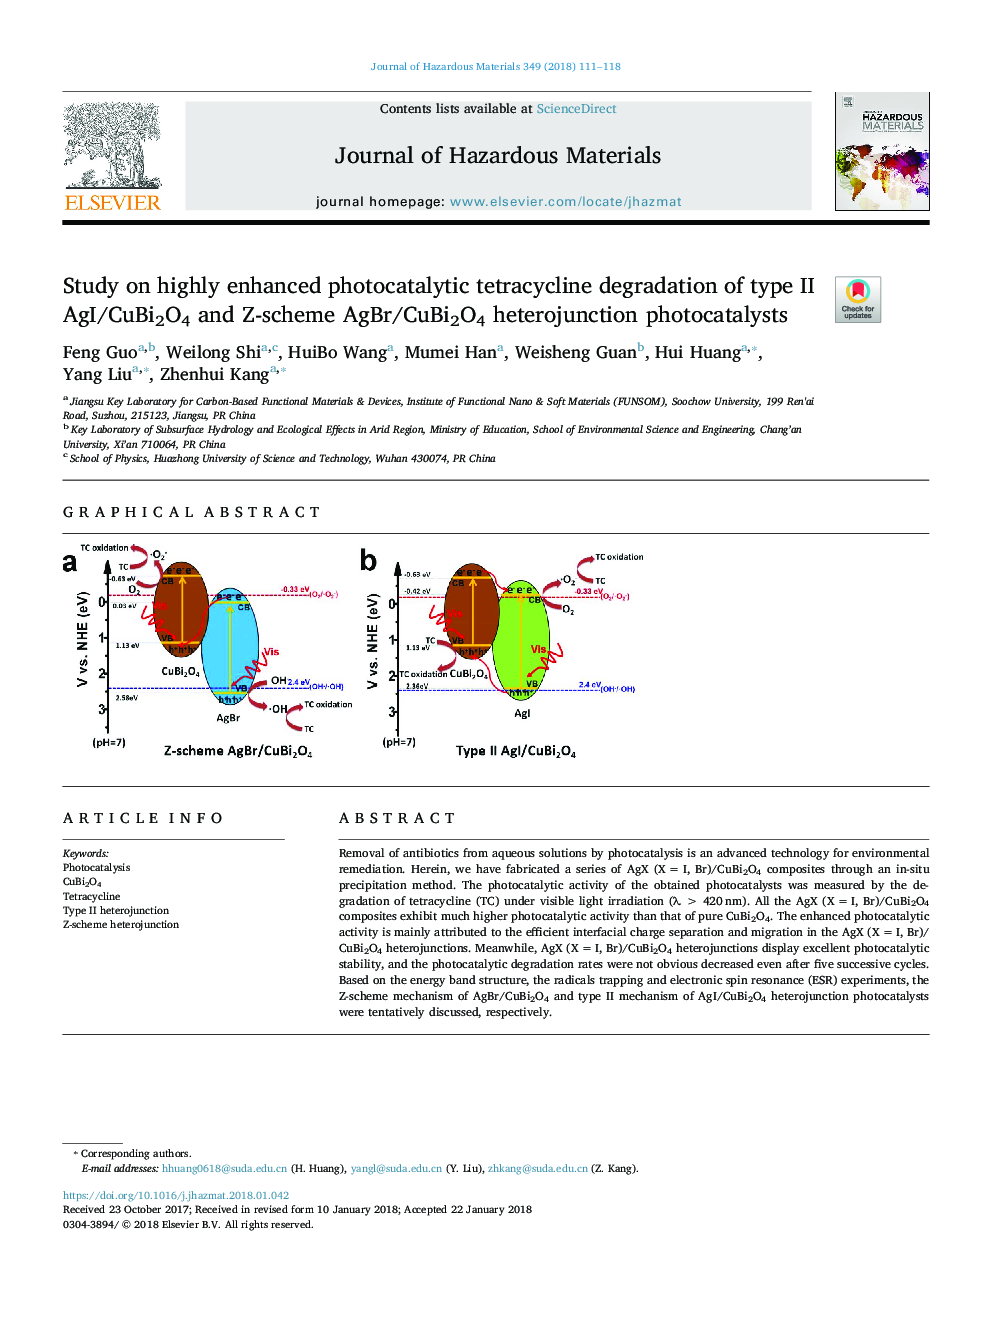 Study on highly enhanced photocatalytic tetracycline degradation of type â¡ AgI/CuBi2O4 and Z-scheme AgBr/CuBi2O4 heterojunction photocatalysts